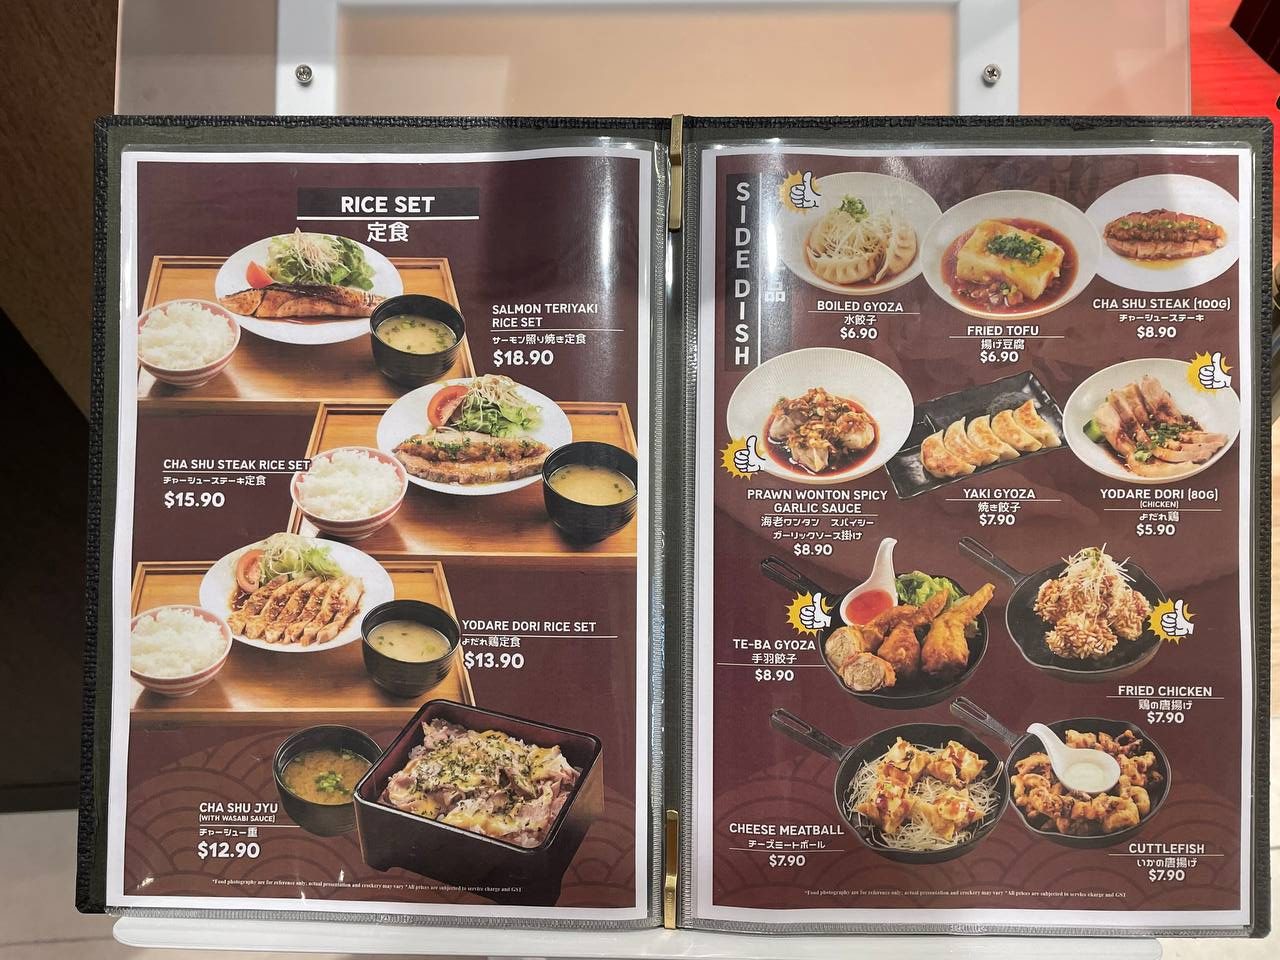 Michelinstarred Tokyo ramen restaurant Nakiryu opens at Plaza